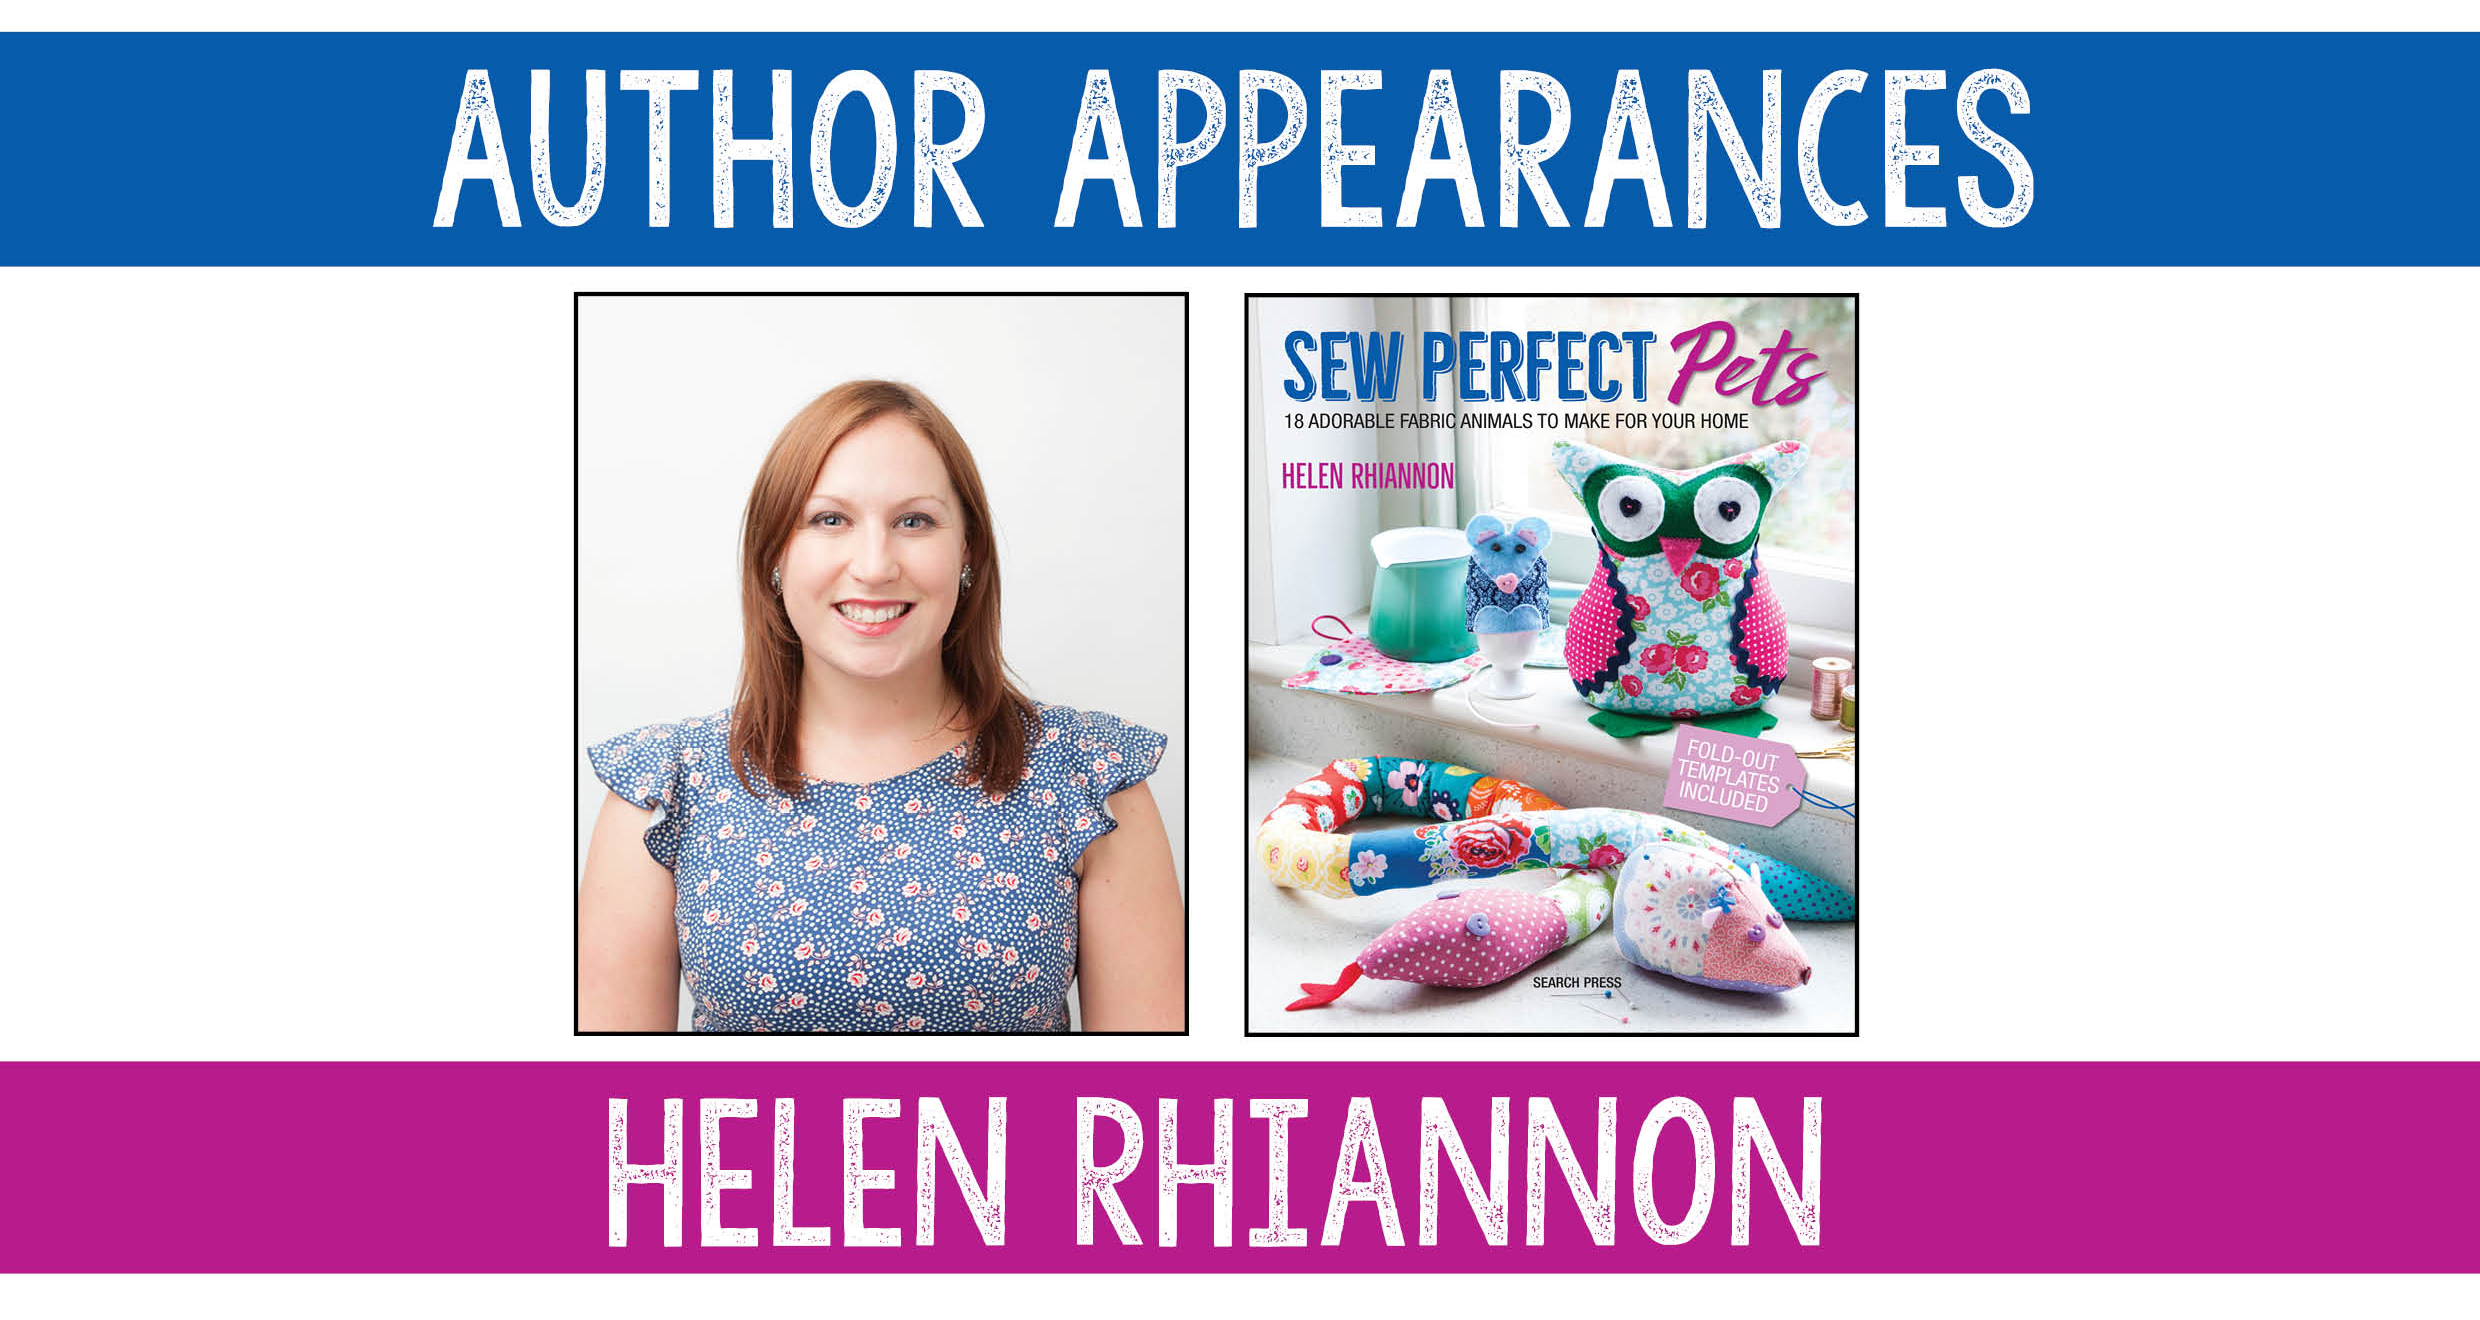 Author Appearances: Helen Rhiannon